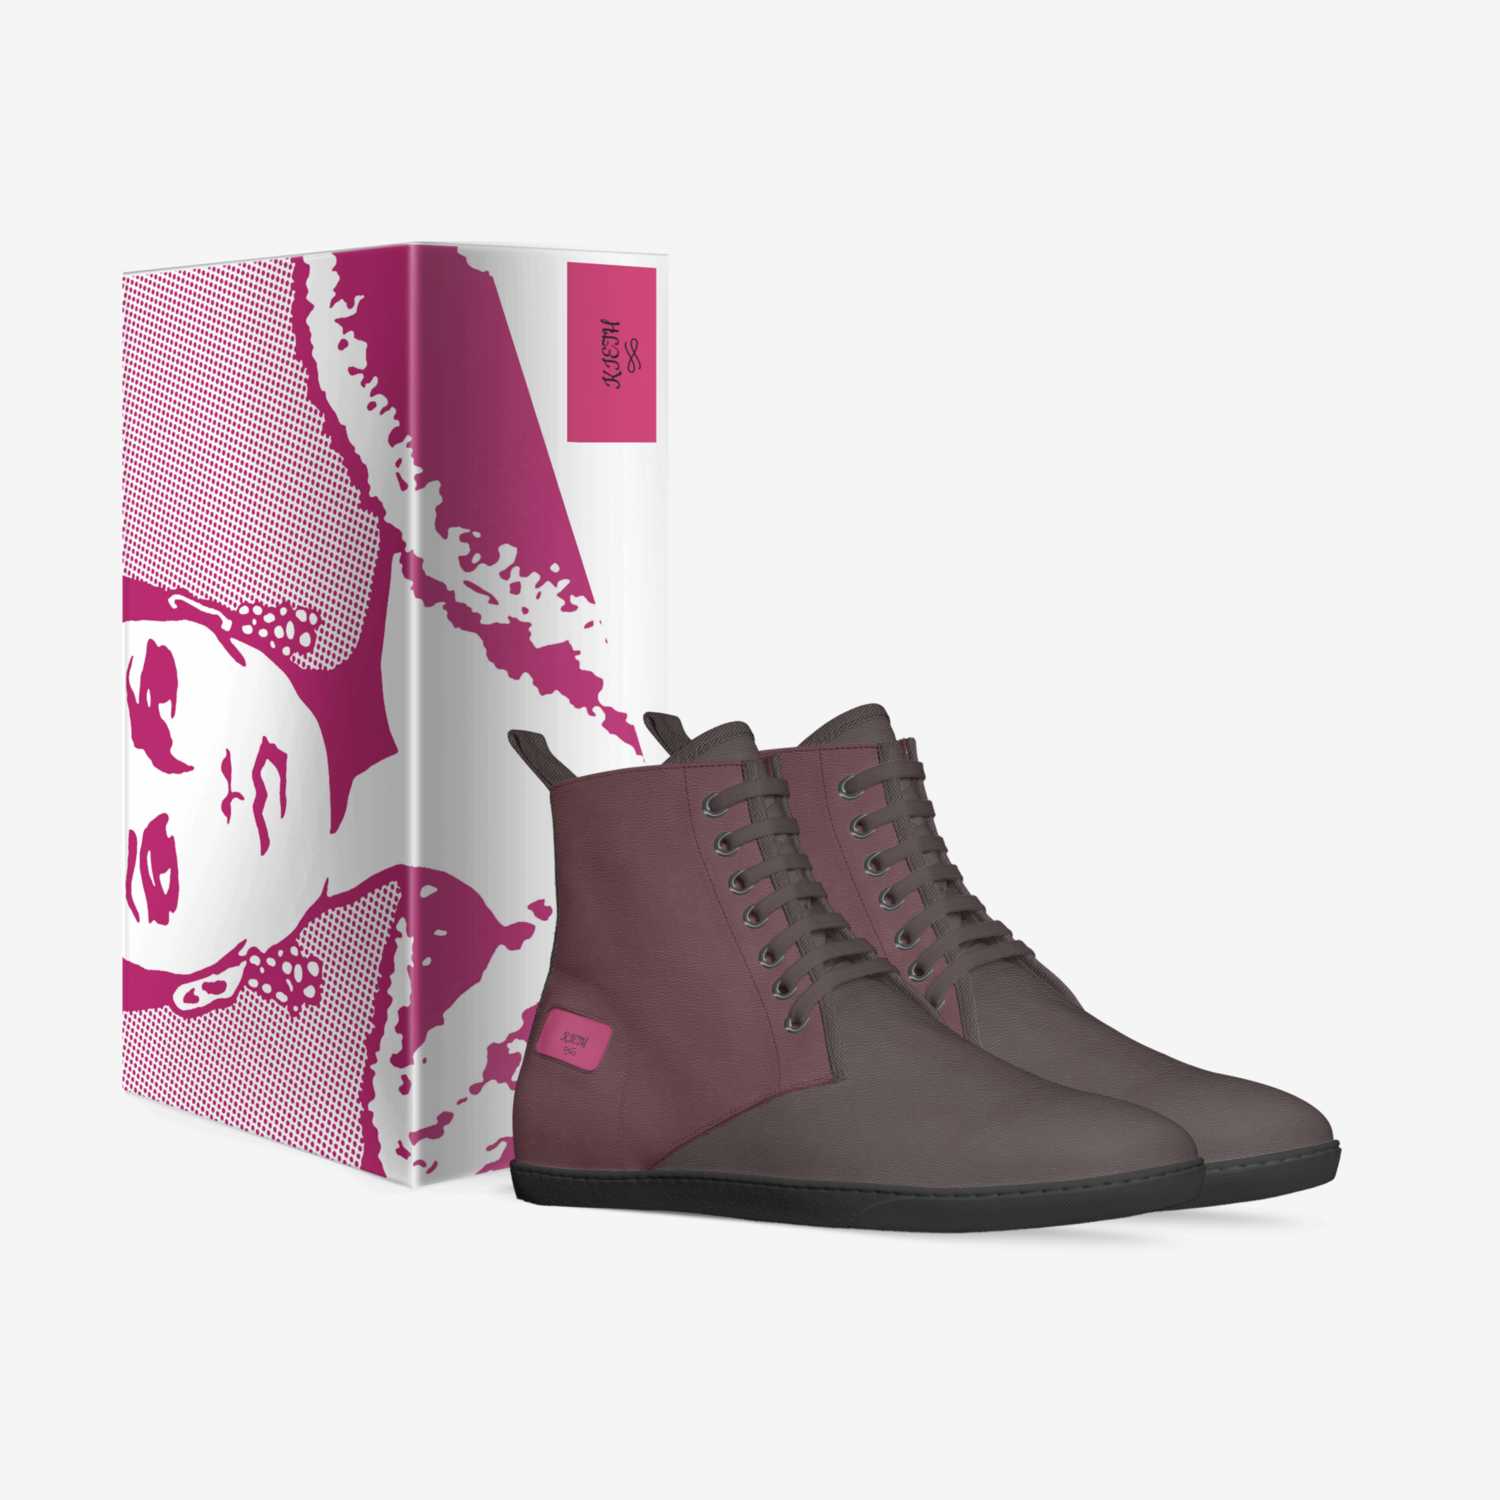 KIETH custom made in Italy shoes by Goteborg Rape | Box view